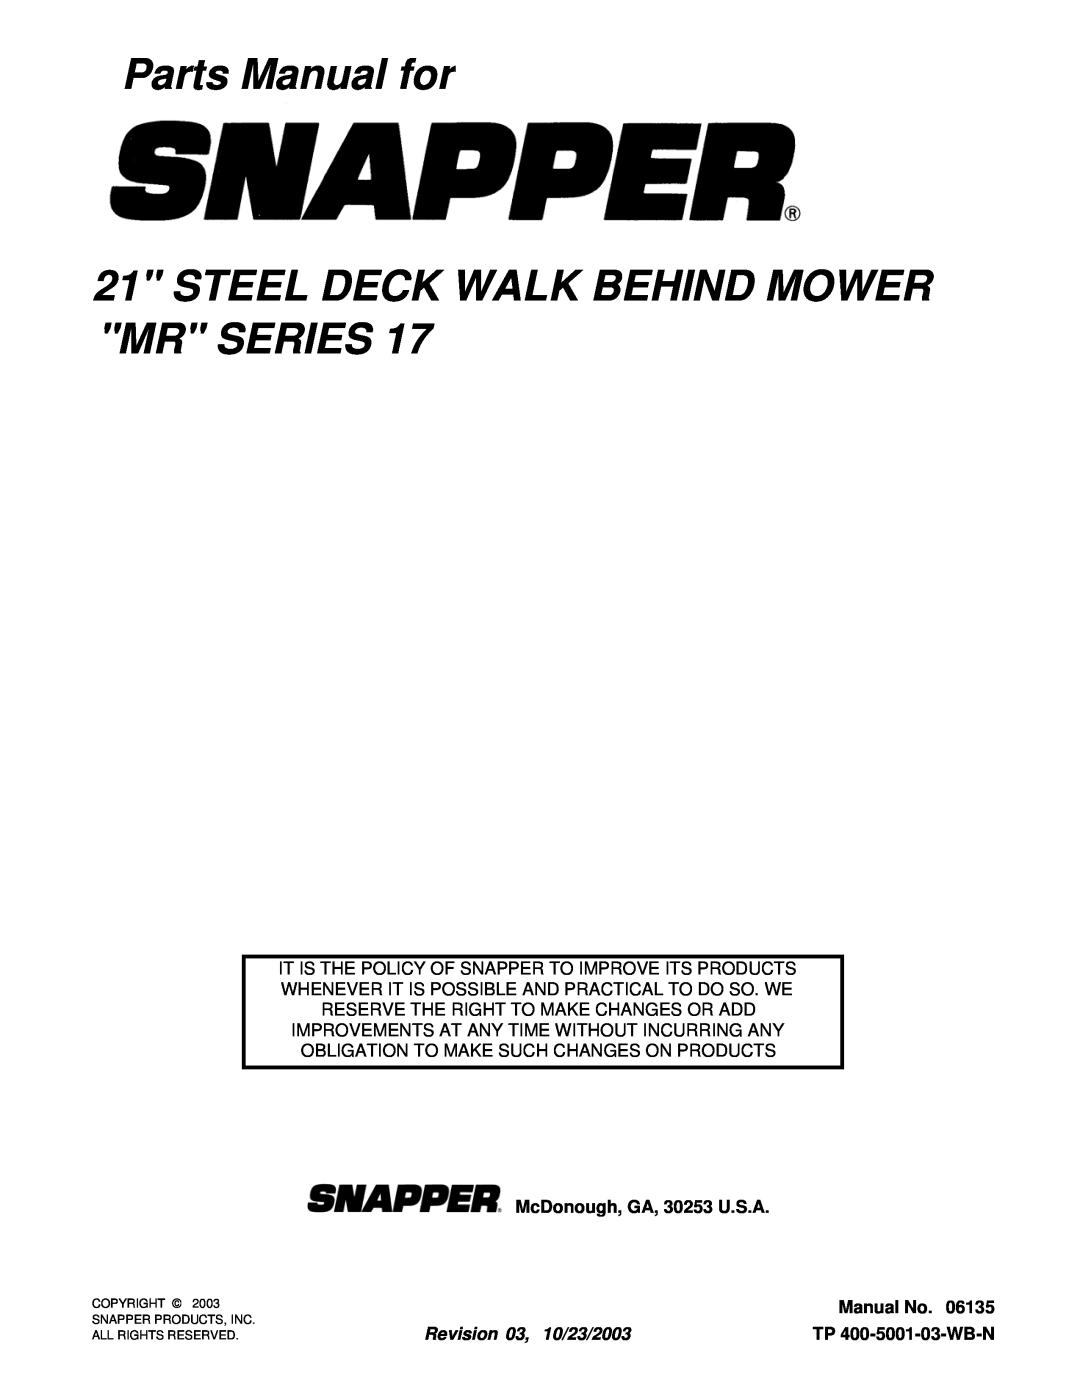 Snapper MRP216517B manual Parts Manual for, Steel Deck Walk Behind Mower Mr Series, McDonough, GA, 30253 U.S.A, Manual No 